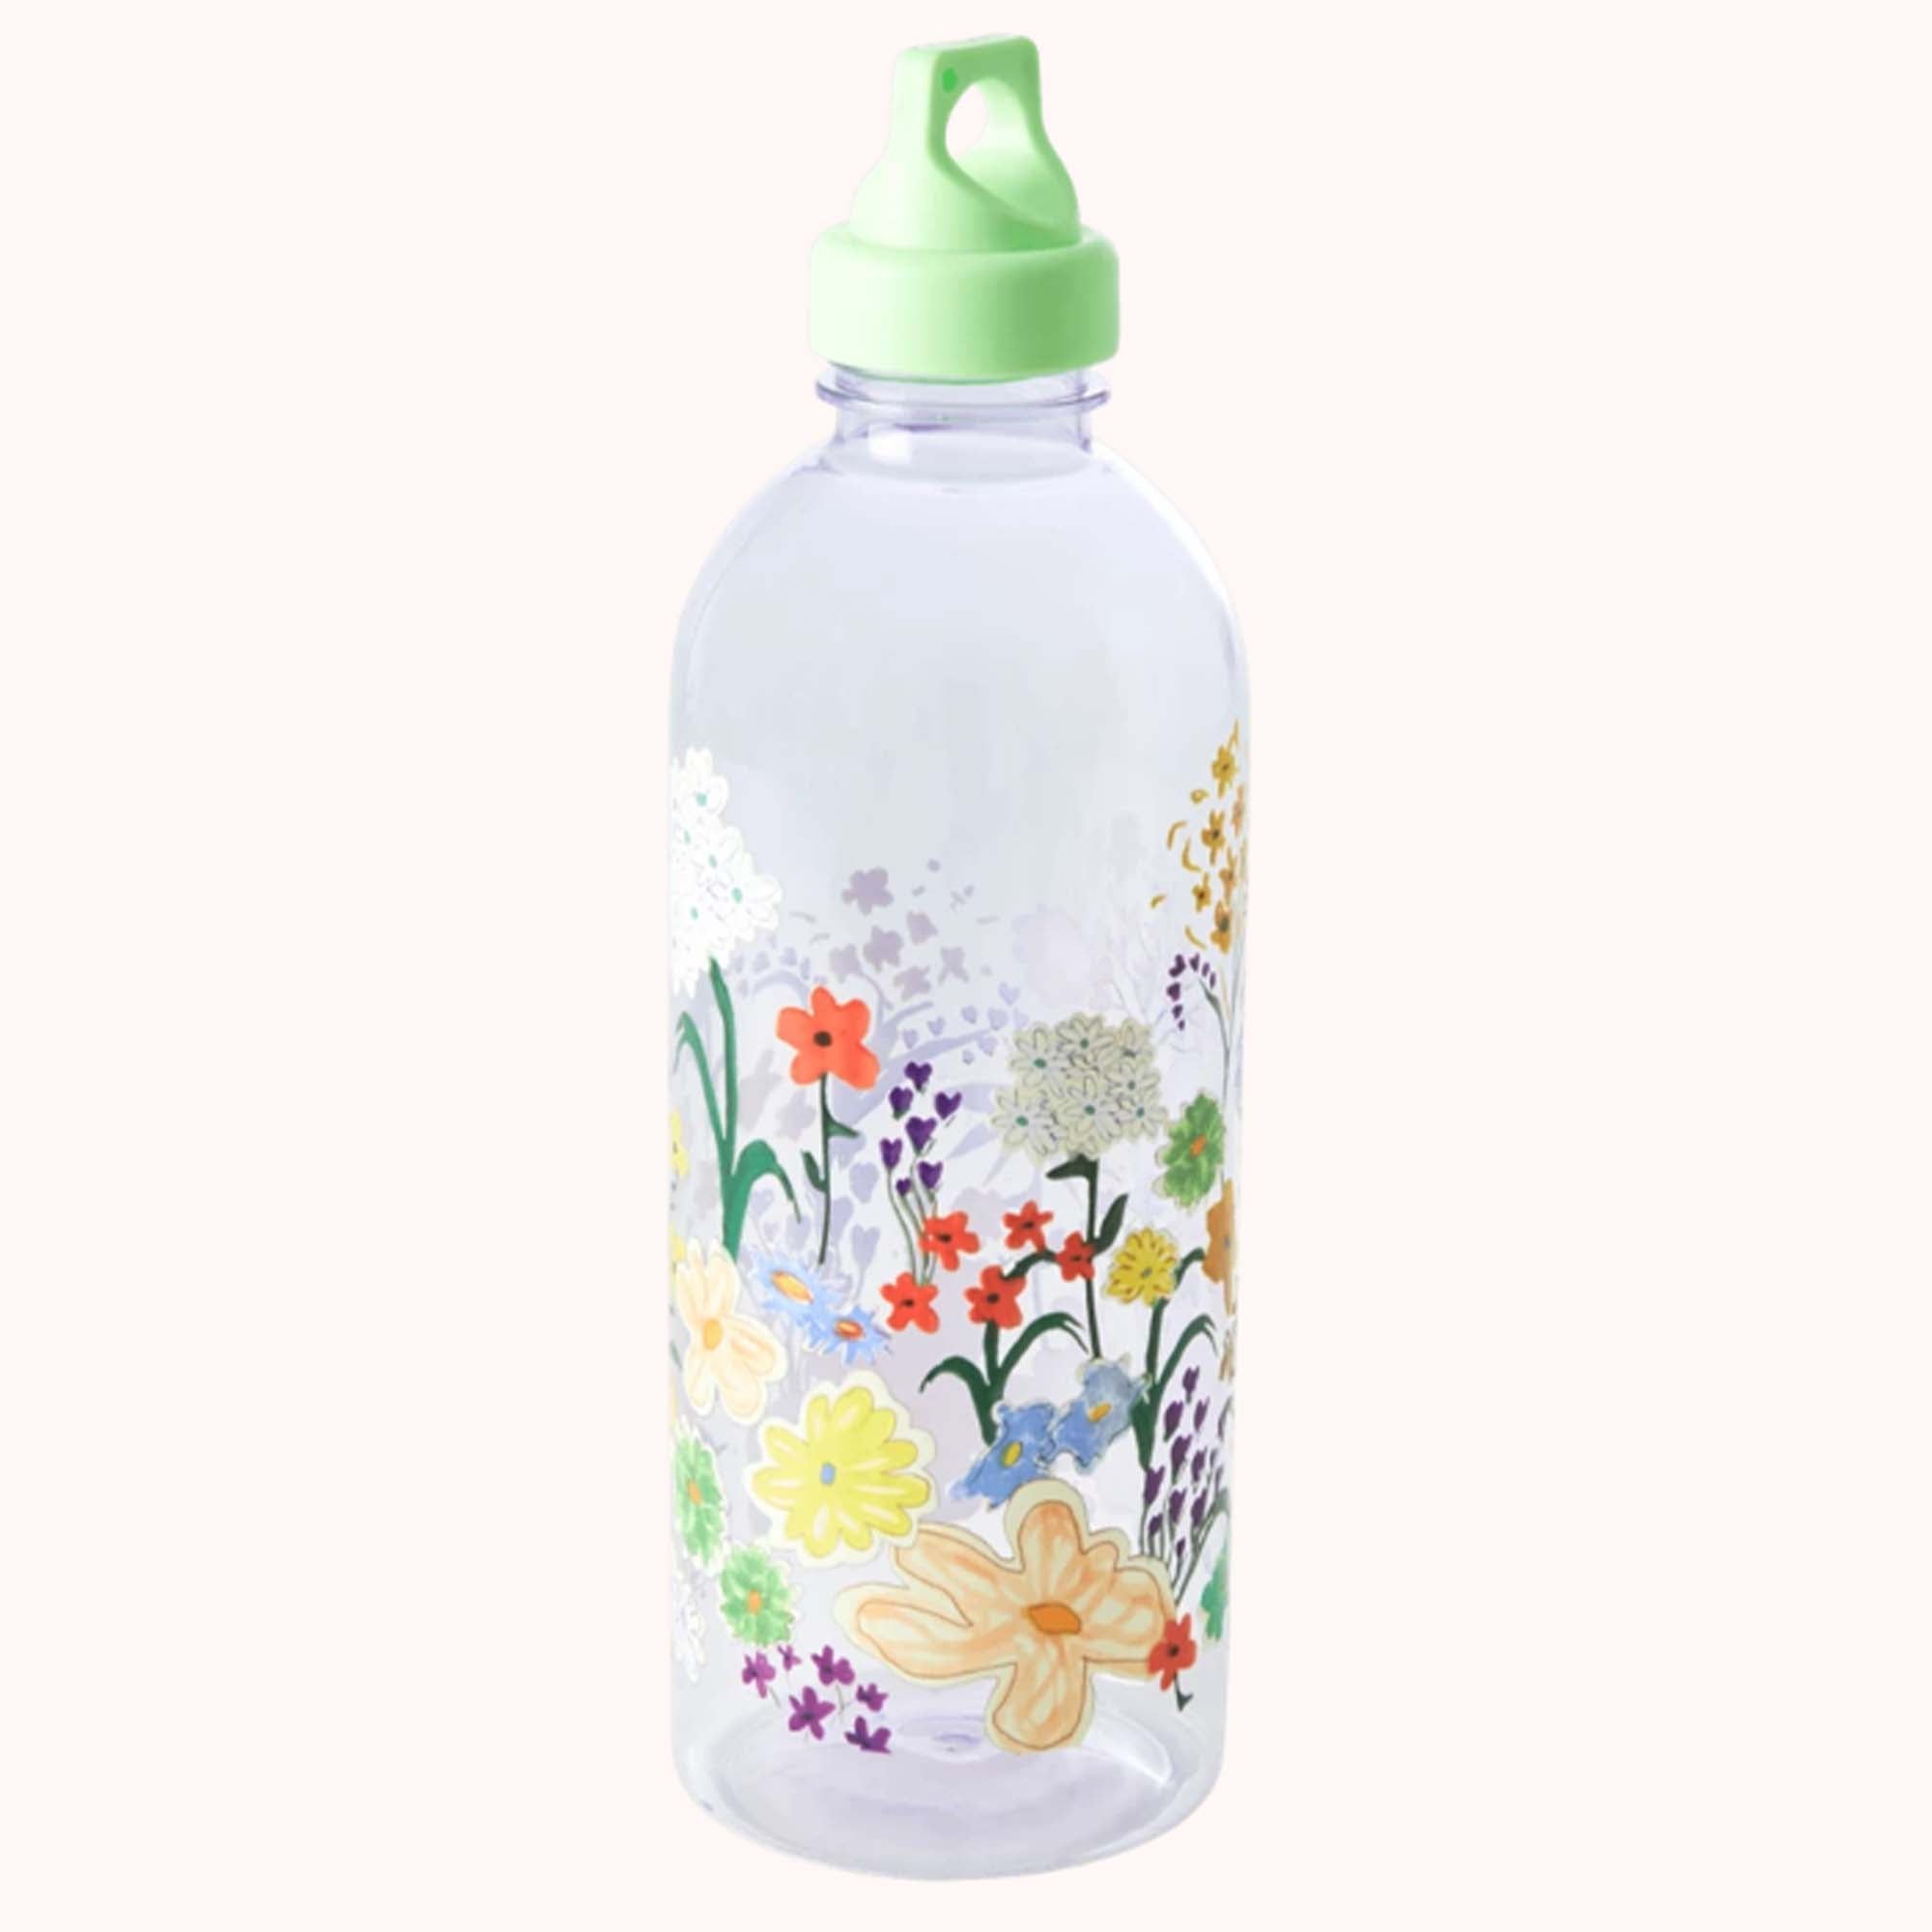 Rice Vannflaske m/blomstermotiv